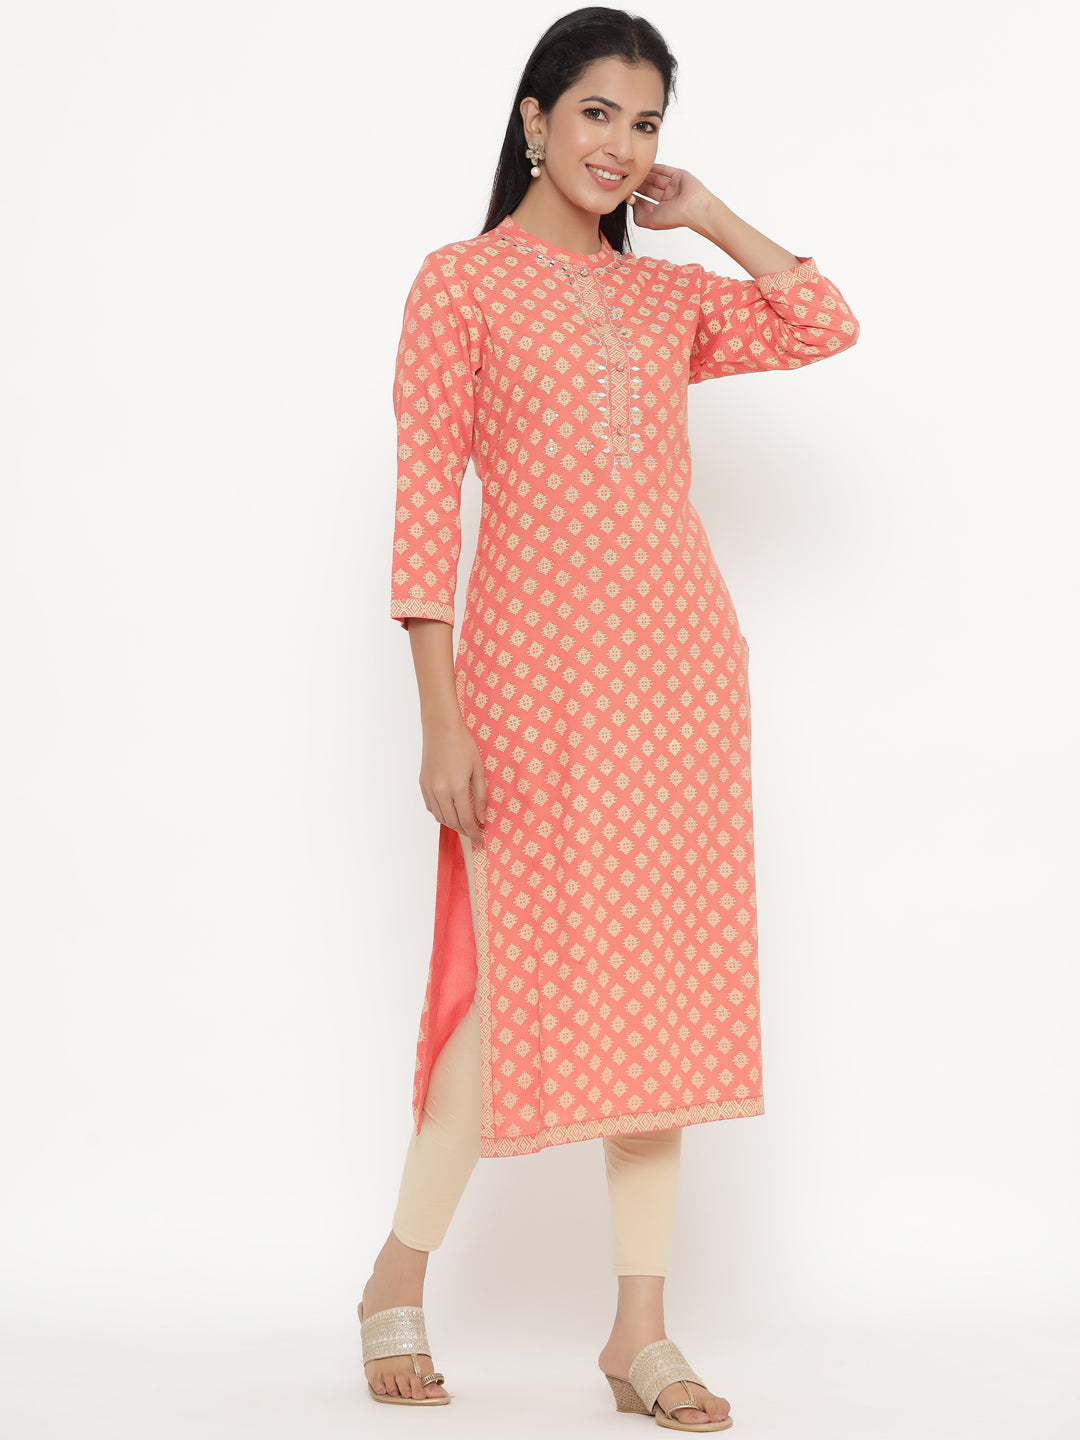 Women's Self Desgin Rayon Fabric Straight Kurta Peach Color - Kipek